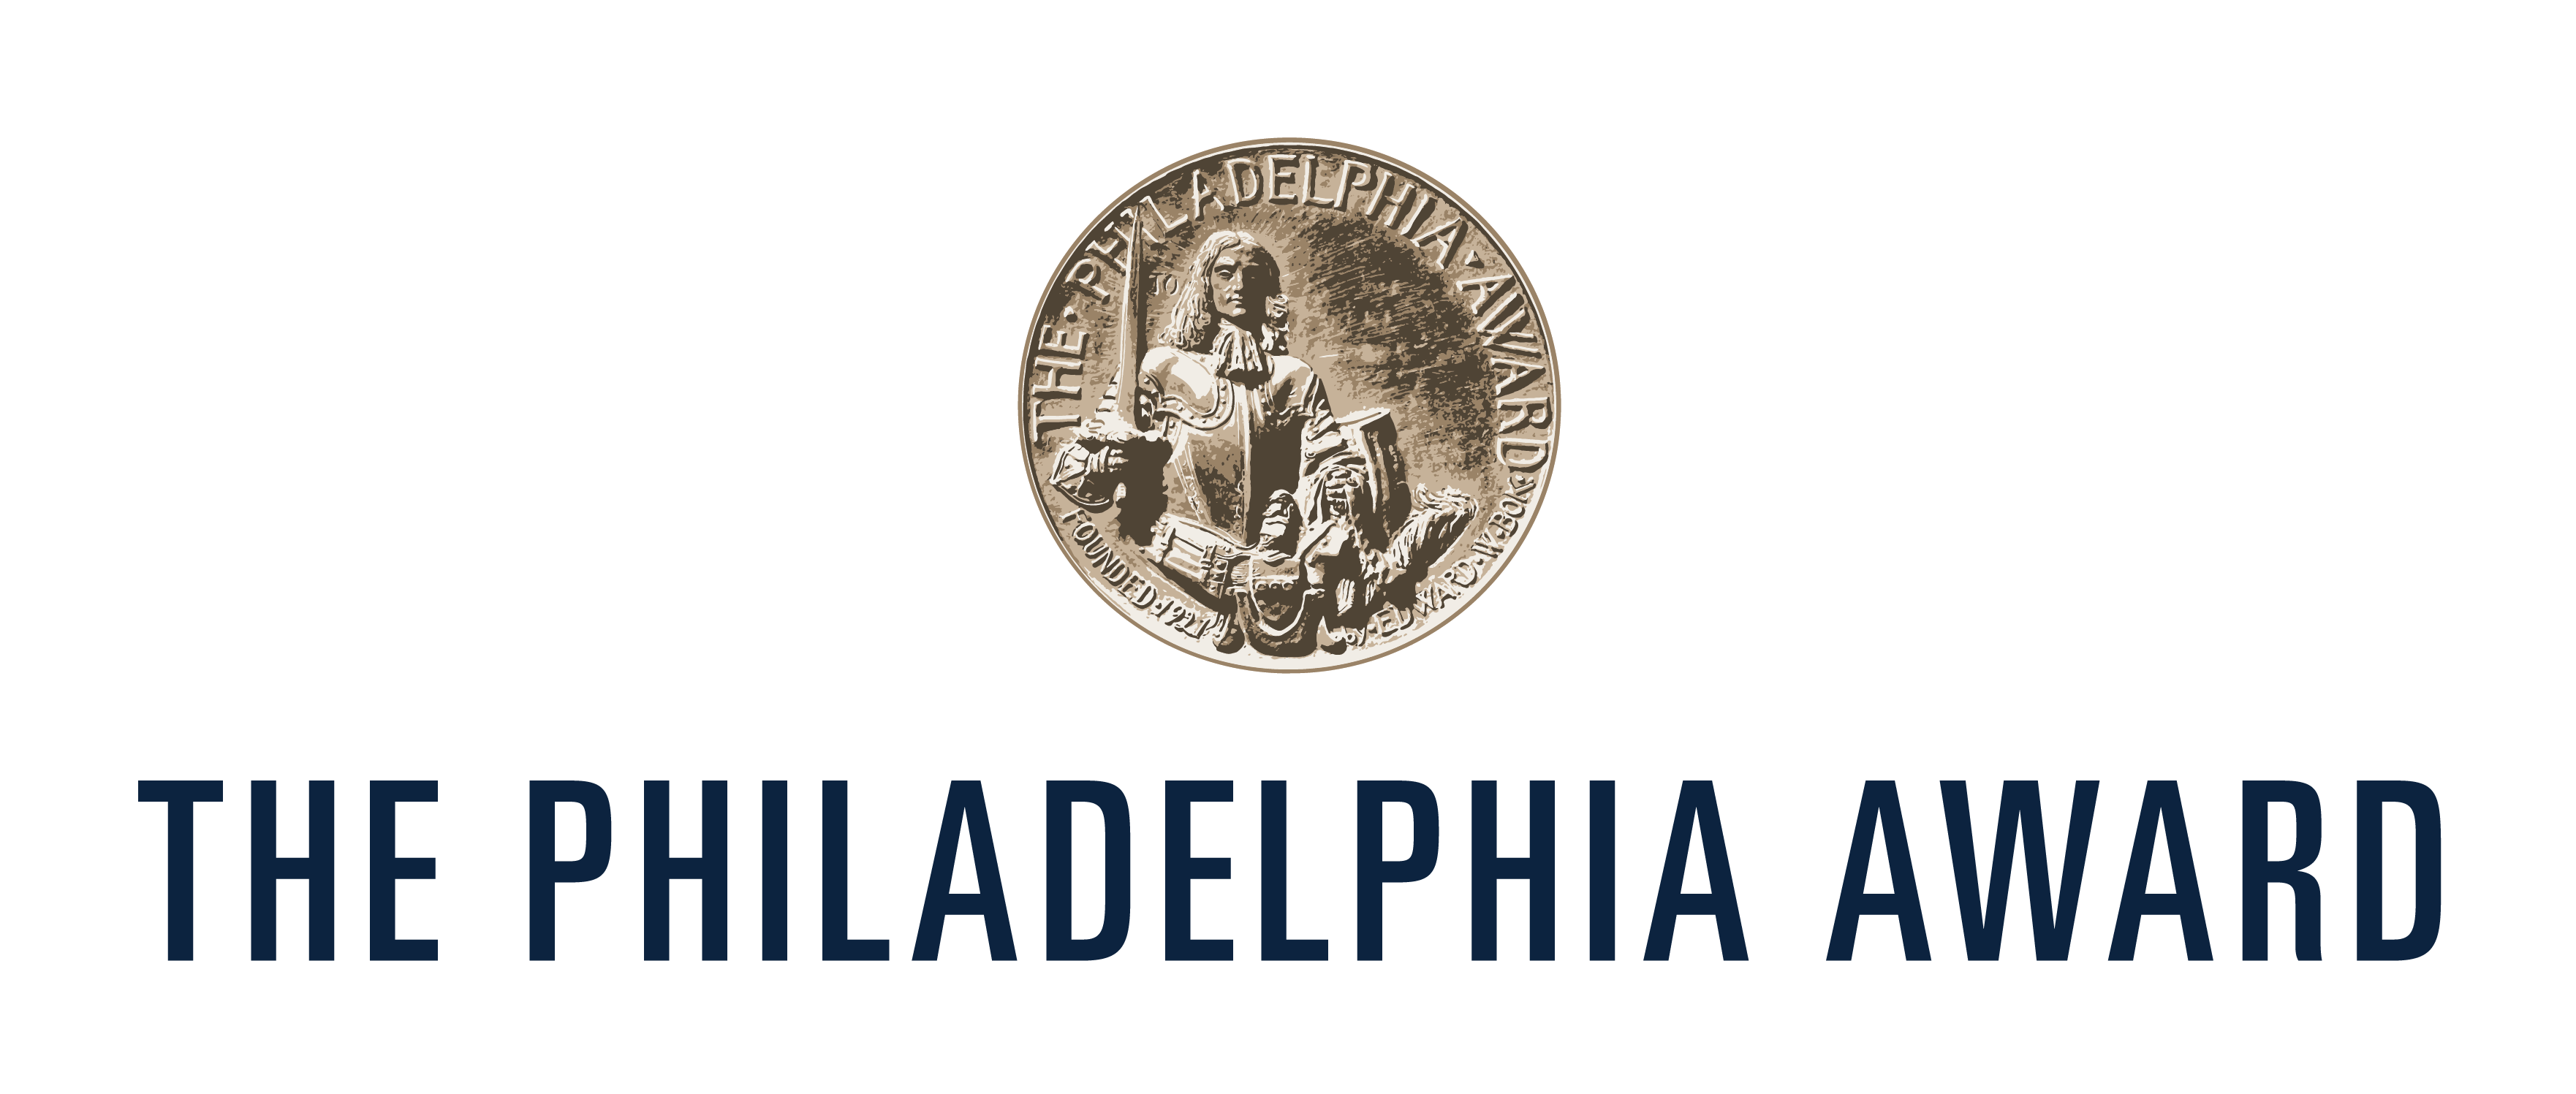 The Philadelphia Award